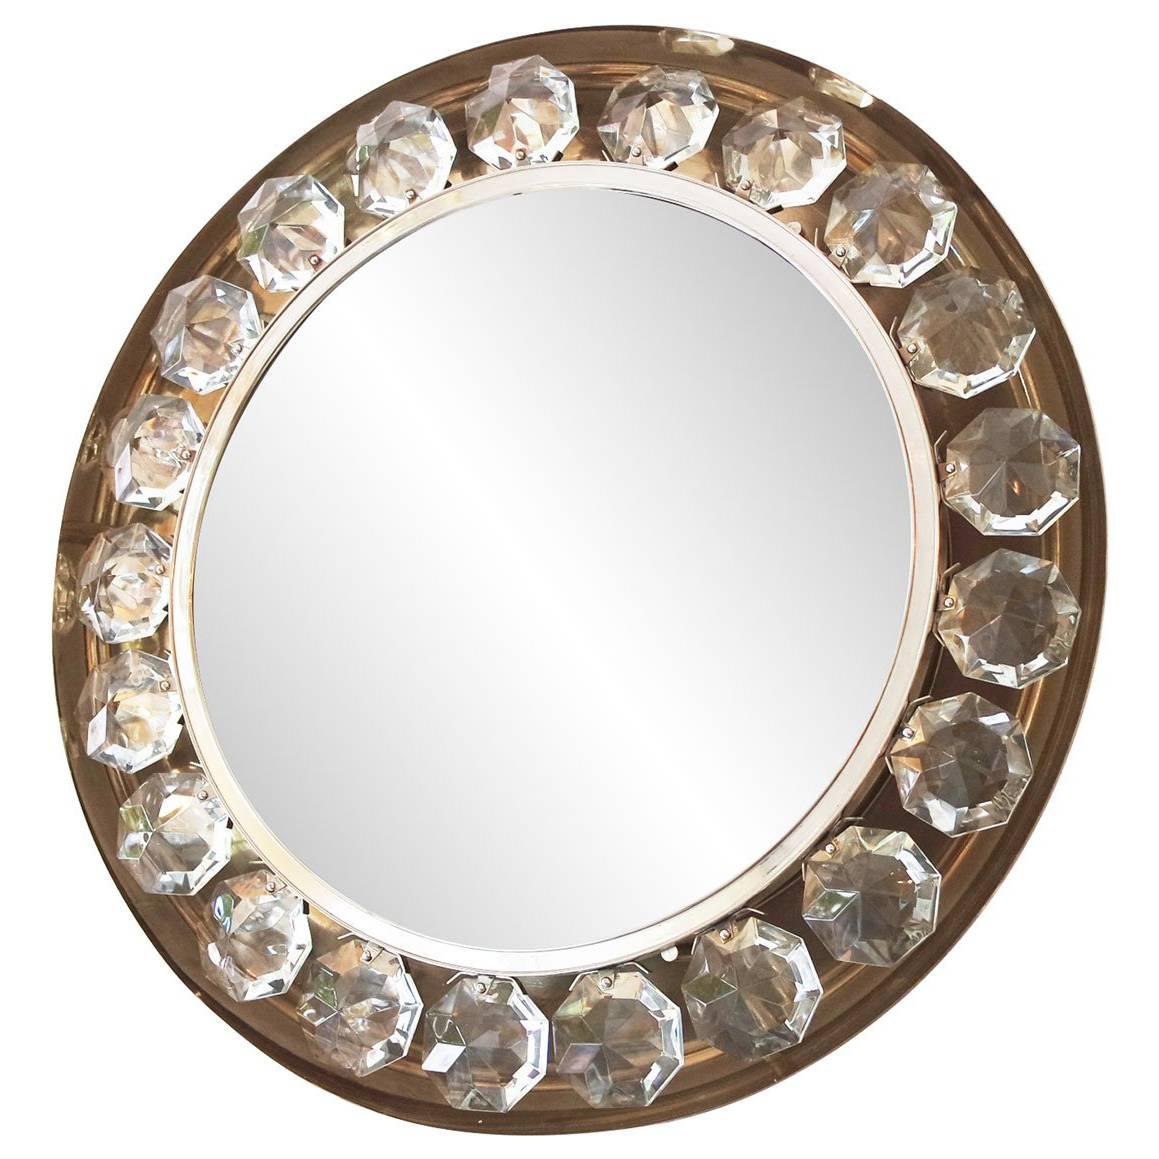 Round Nickel Mirror with "Jewel" Elements by Firma Jochmann